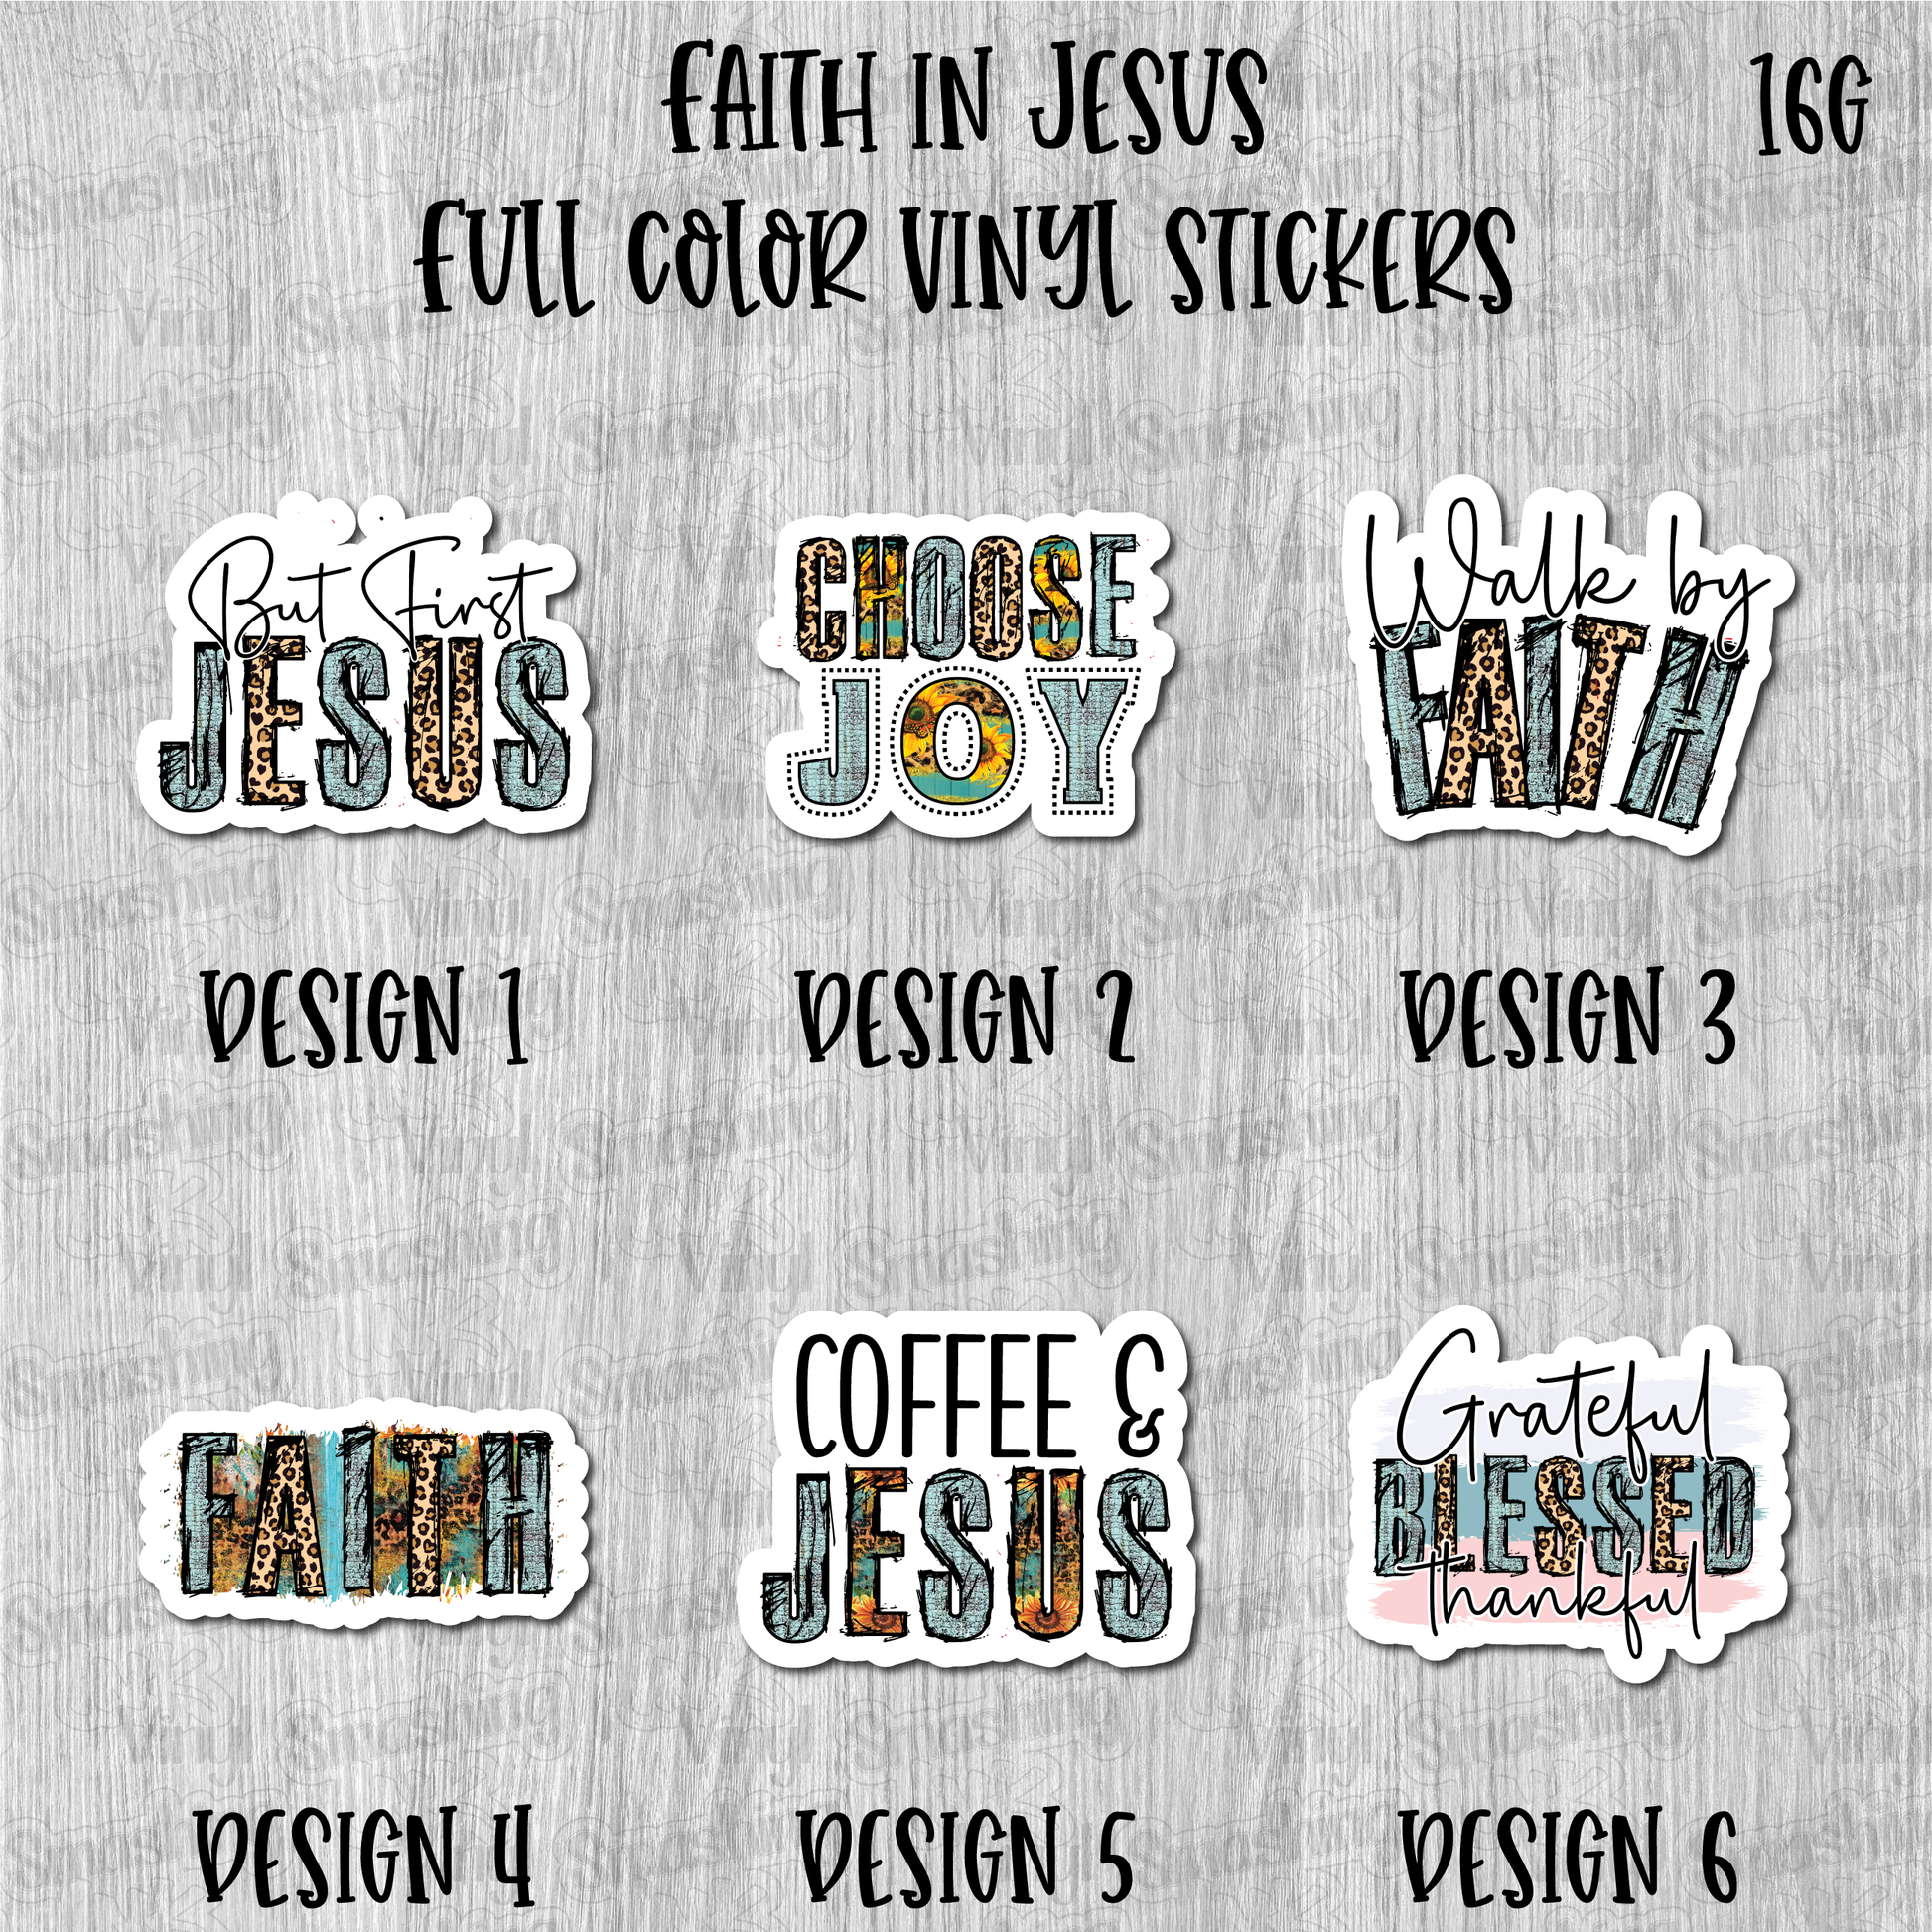 Jesus Christian Stickers Wholesale sticker supplier - Wholesale Stickers